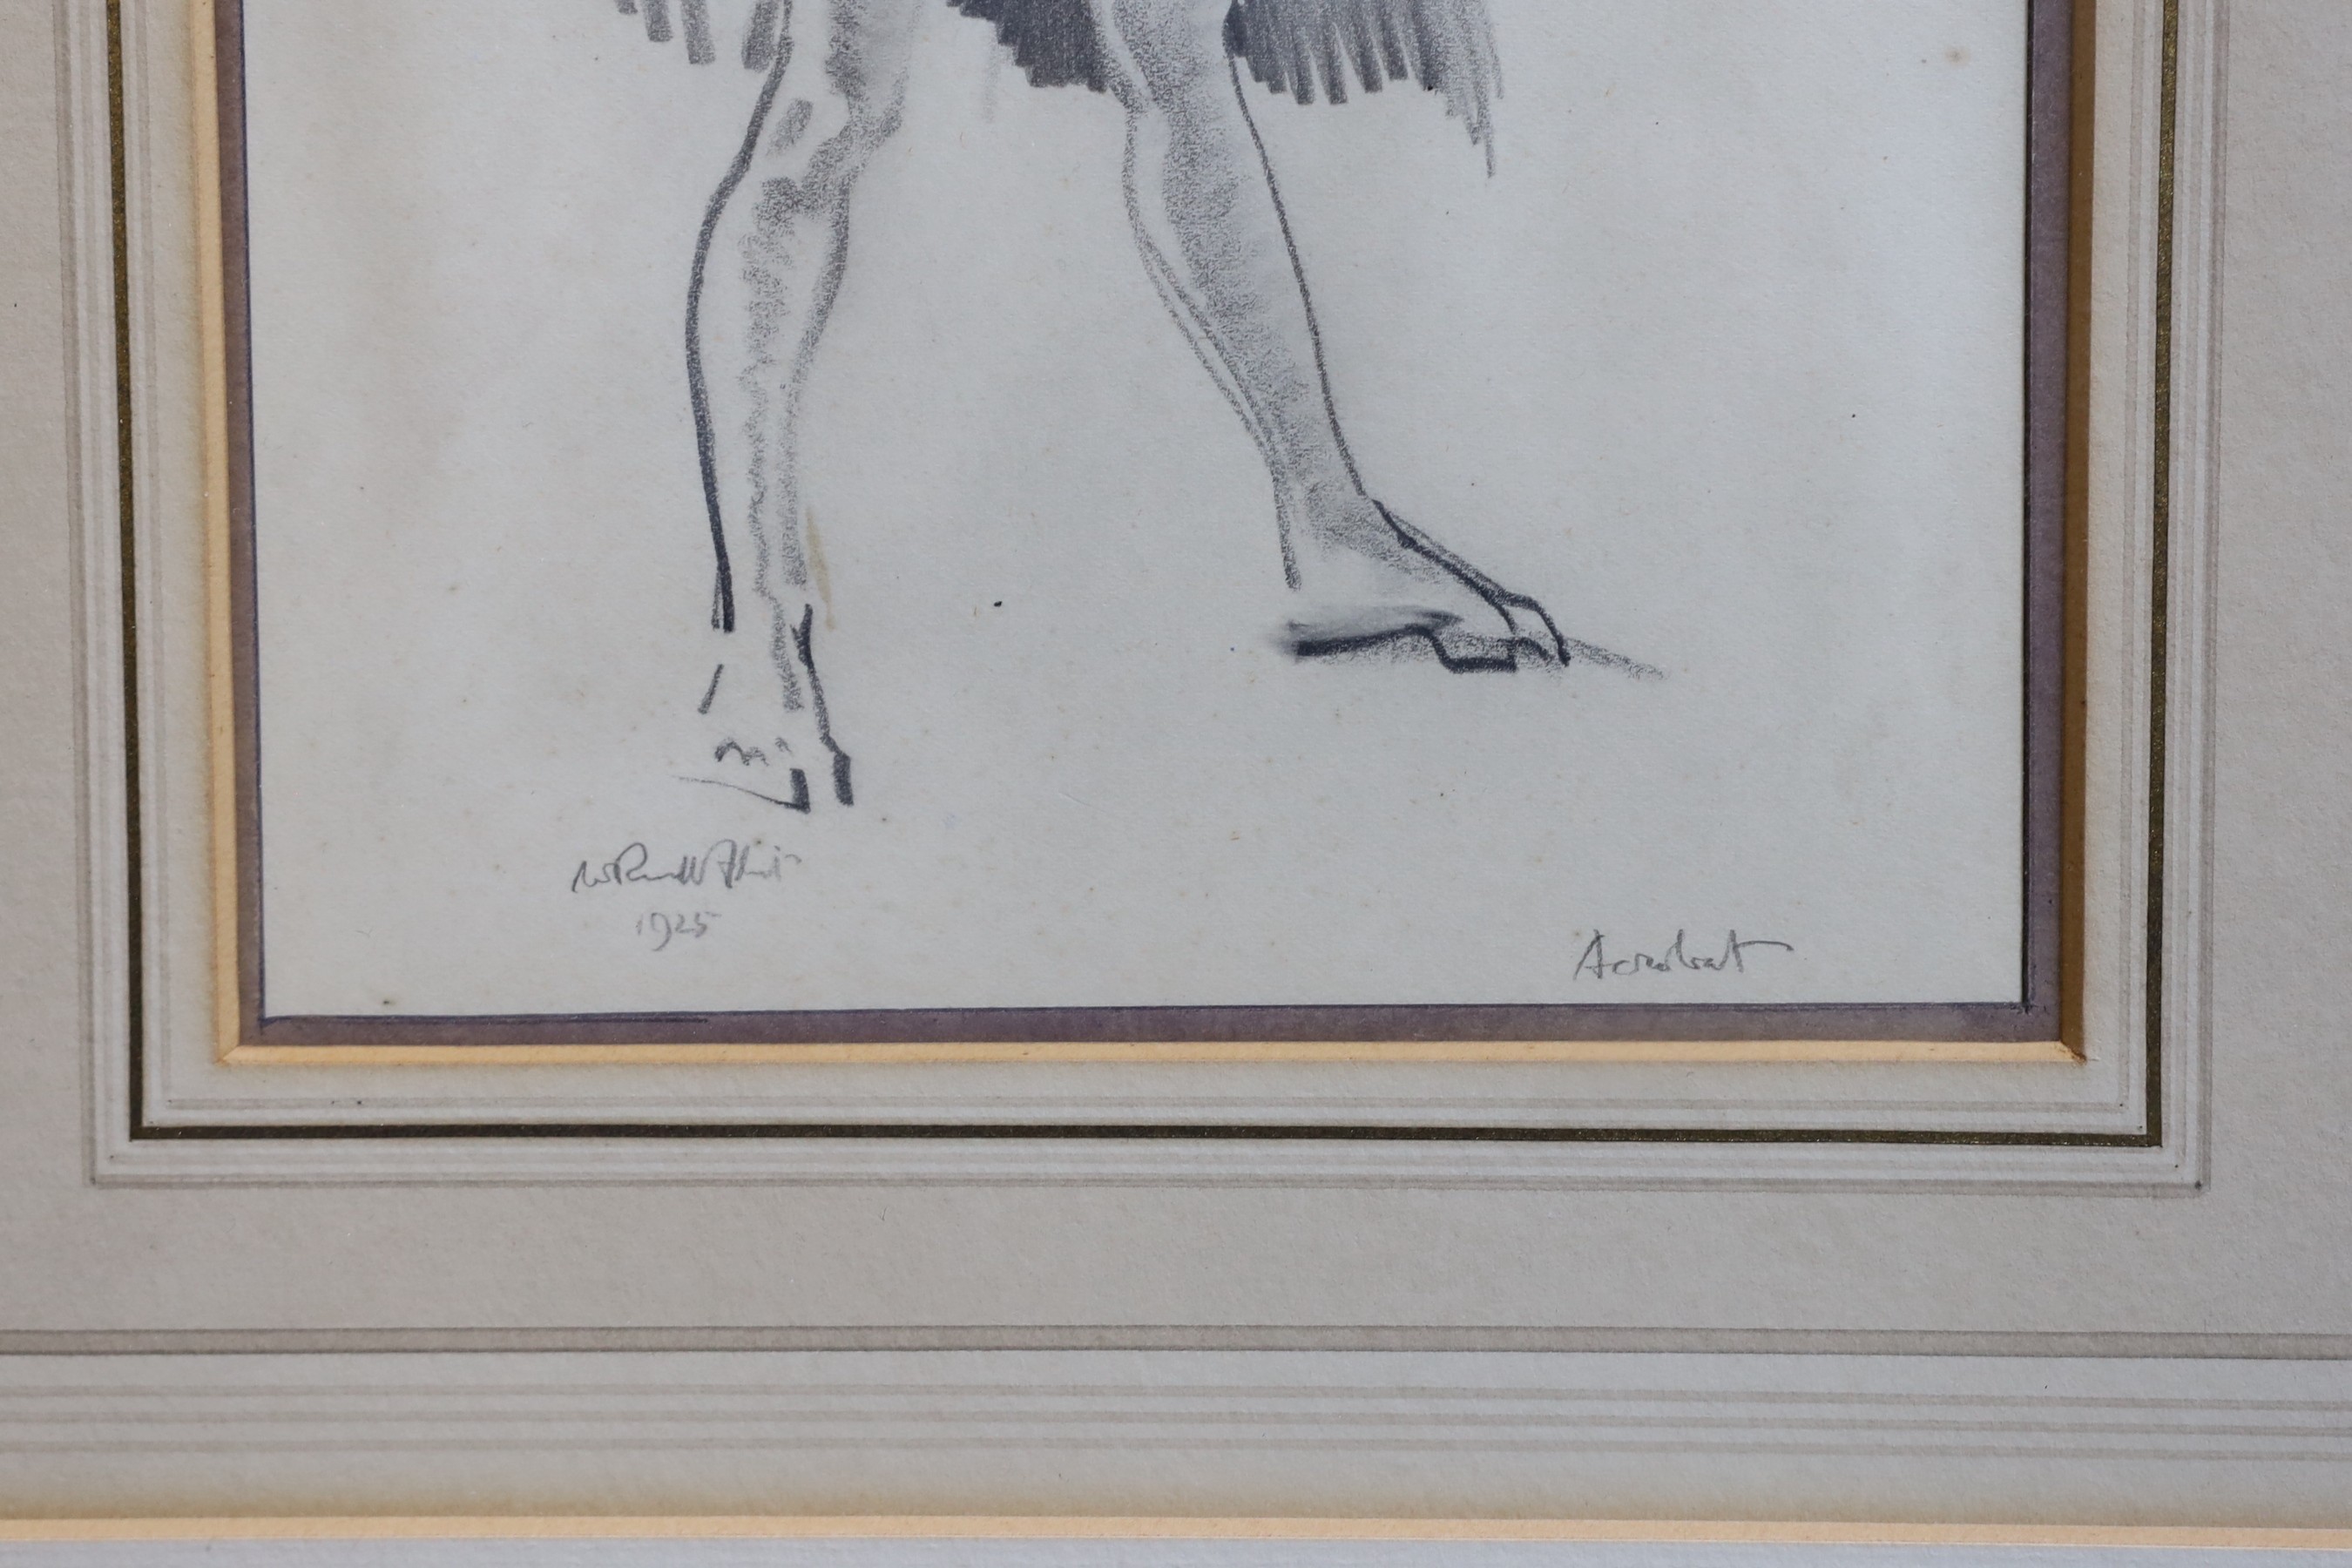 Sir William Russell Flint (1880-1969), 'Acrobat', pencil on paper, 21 x 15cm